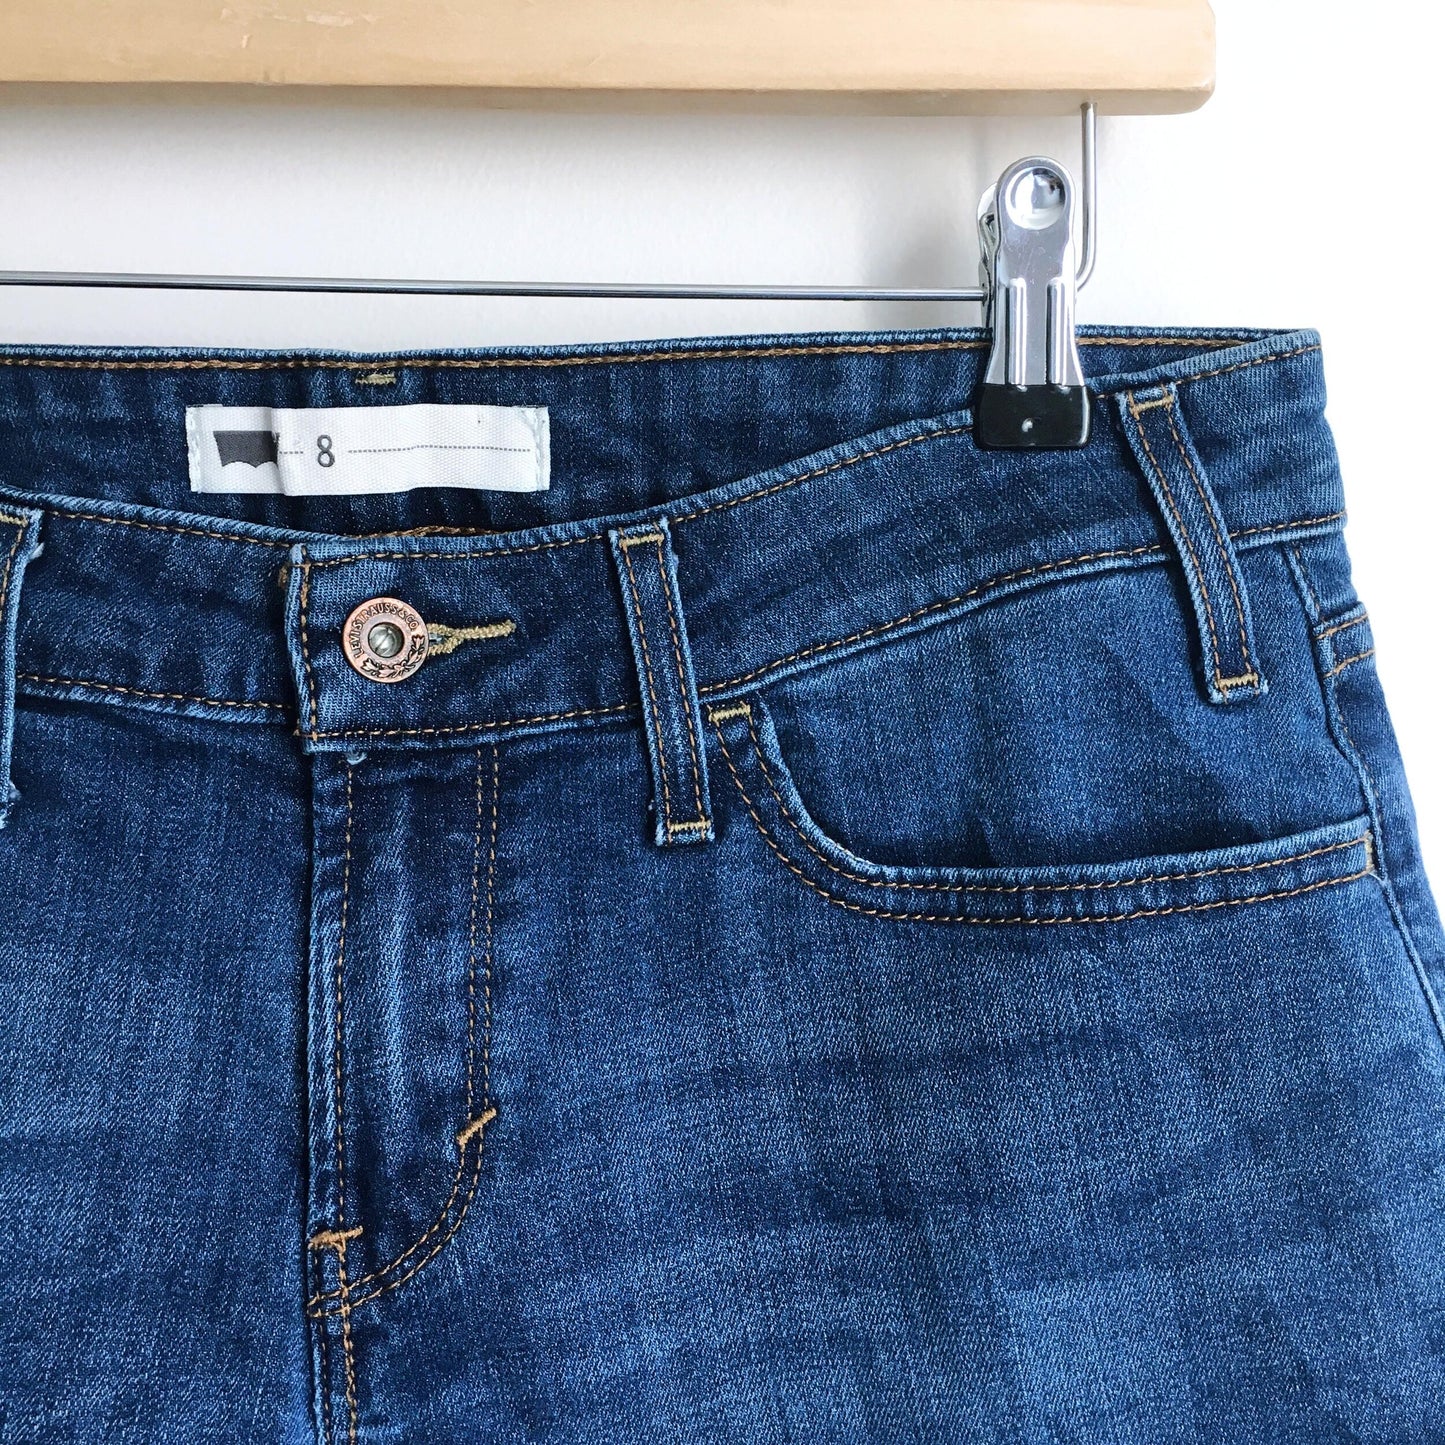 Levi's cut-off jean shorts - size 8